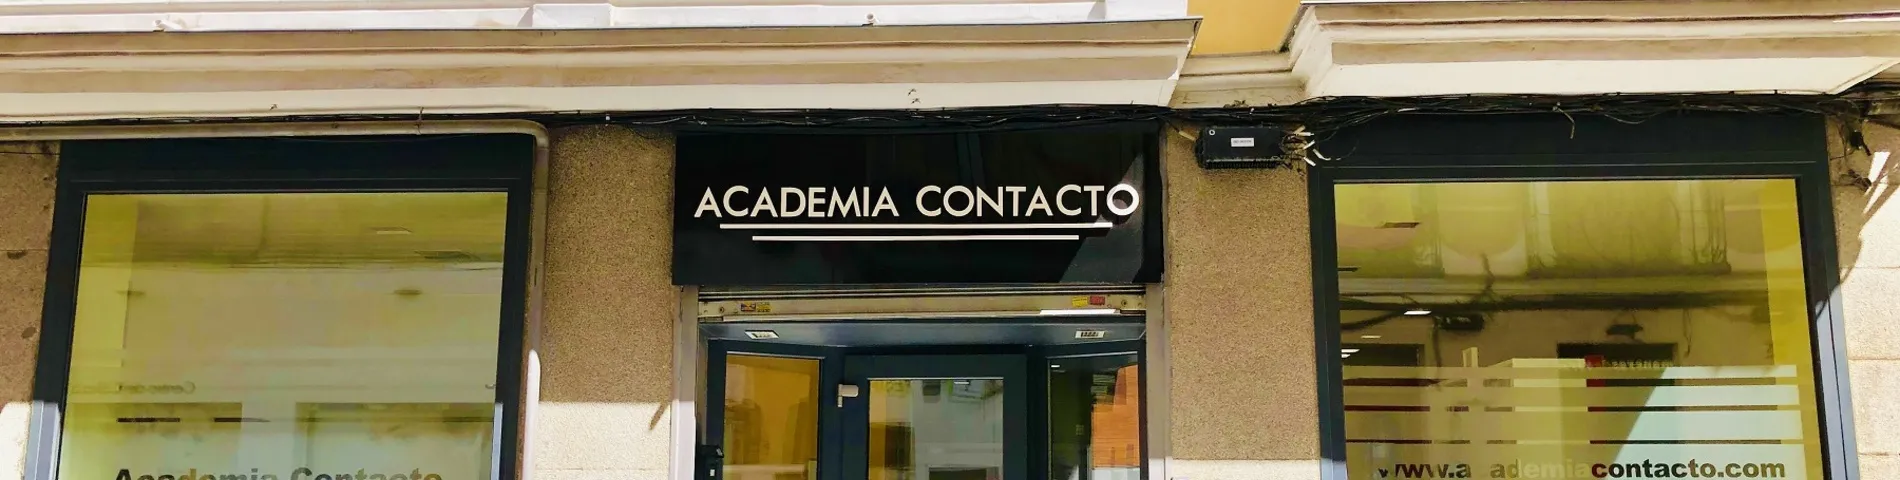 Academia Contacto bilde 1